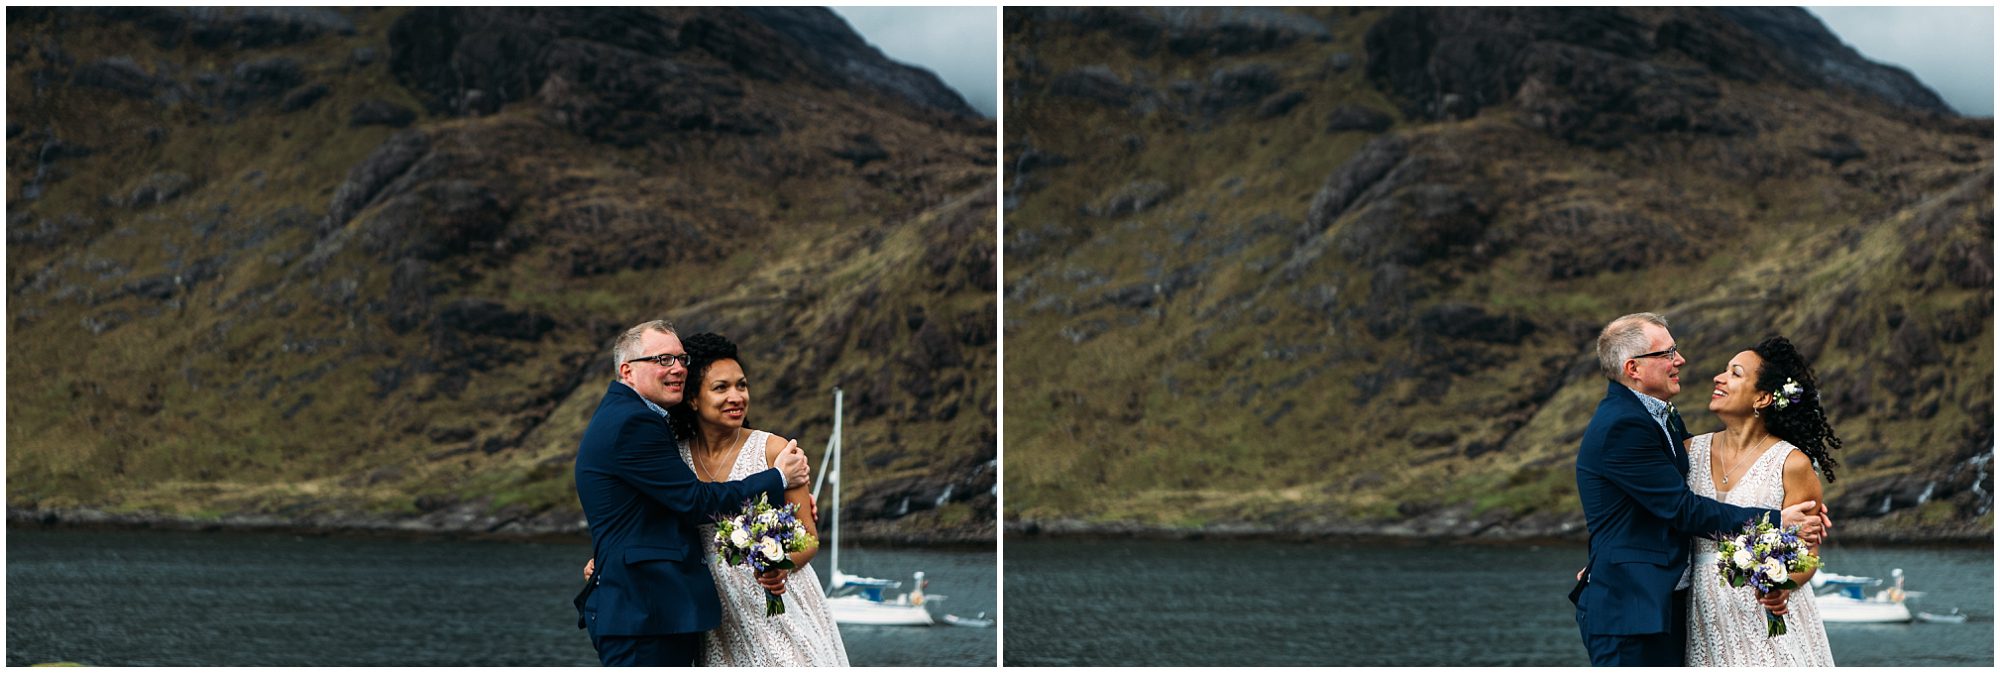 Vow renewal photography Loch Coruisk Isle of Skye